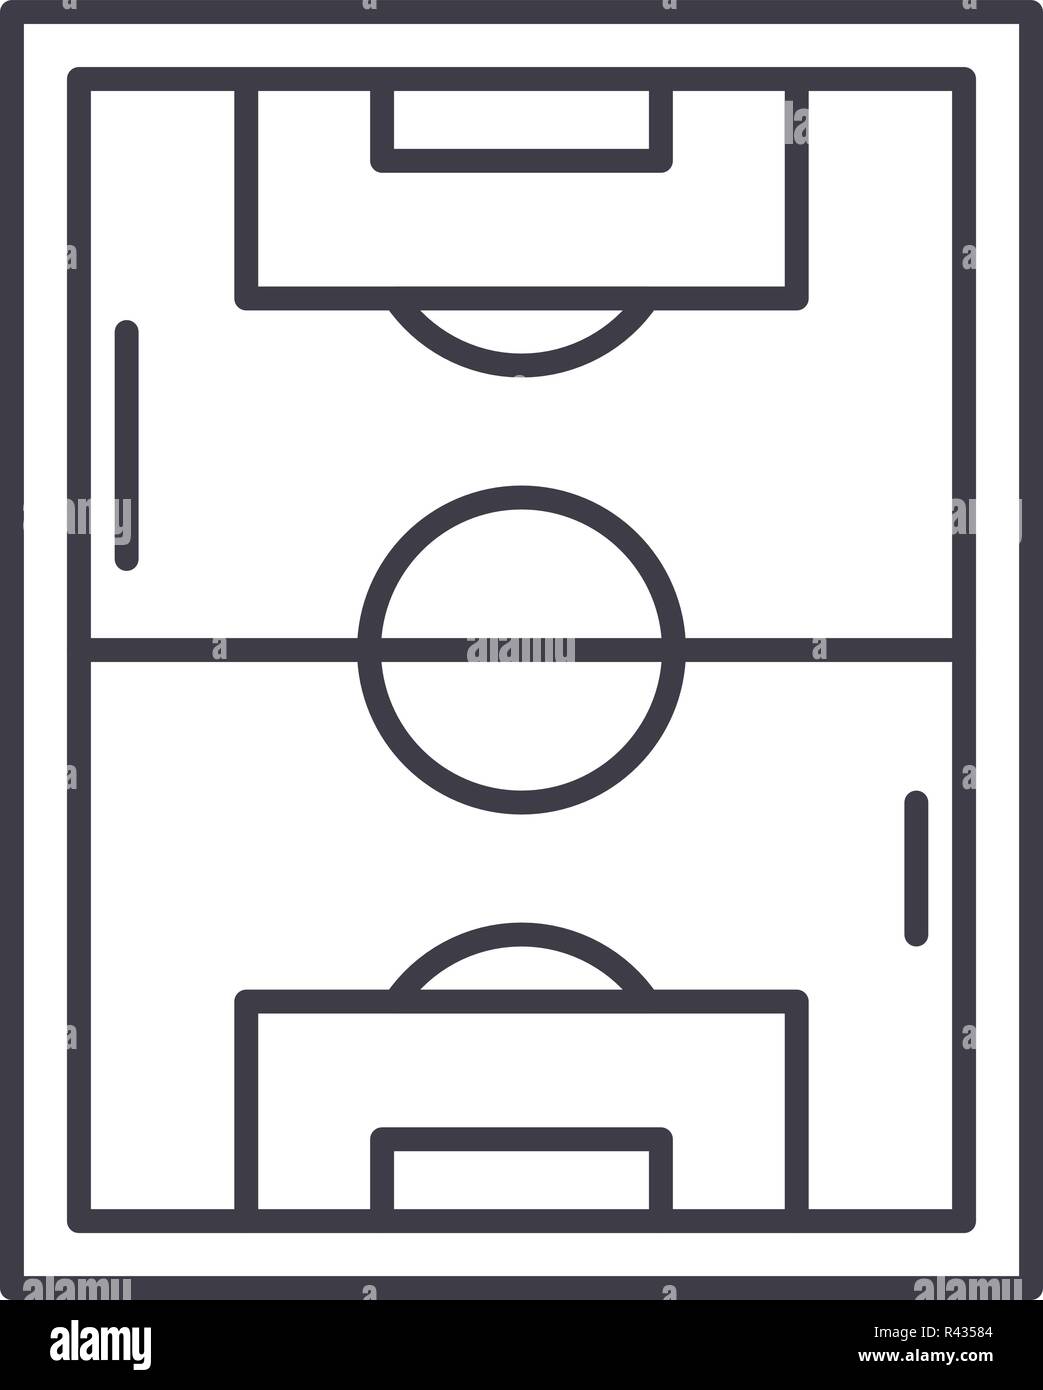 Football field line icon concept. Football field vector linear illustration, symbol, sign Stock Vector